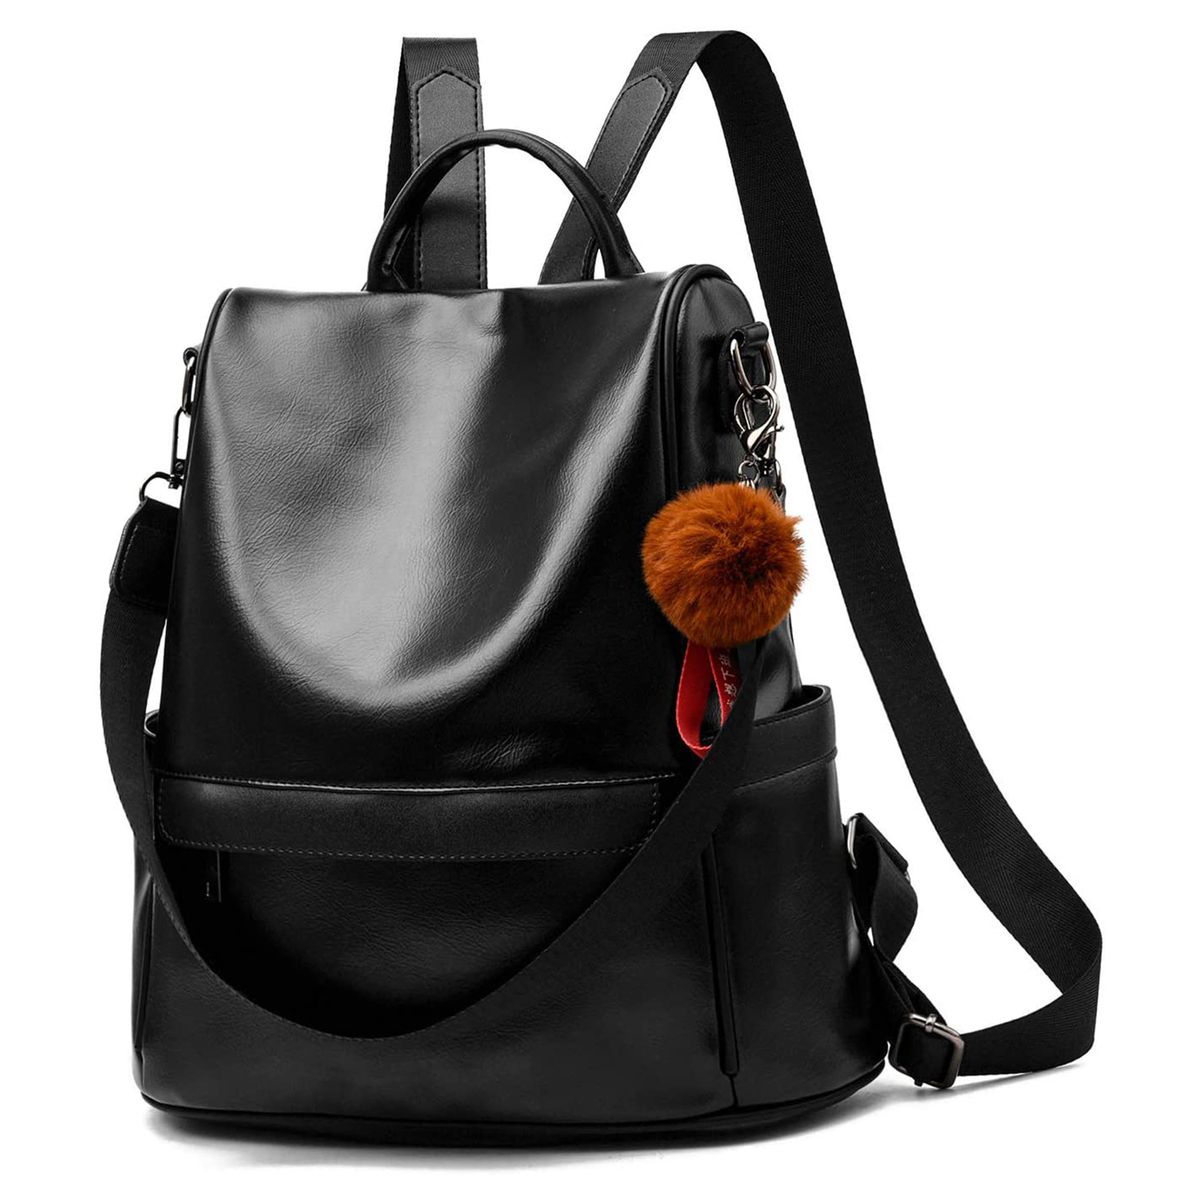 XiongBuy Women Big Bag Casual Travel Backpack Student Bag Wild Backpack Shoulder Bag Crossbody Bag